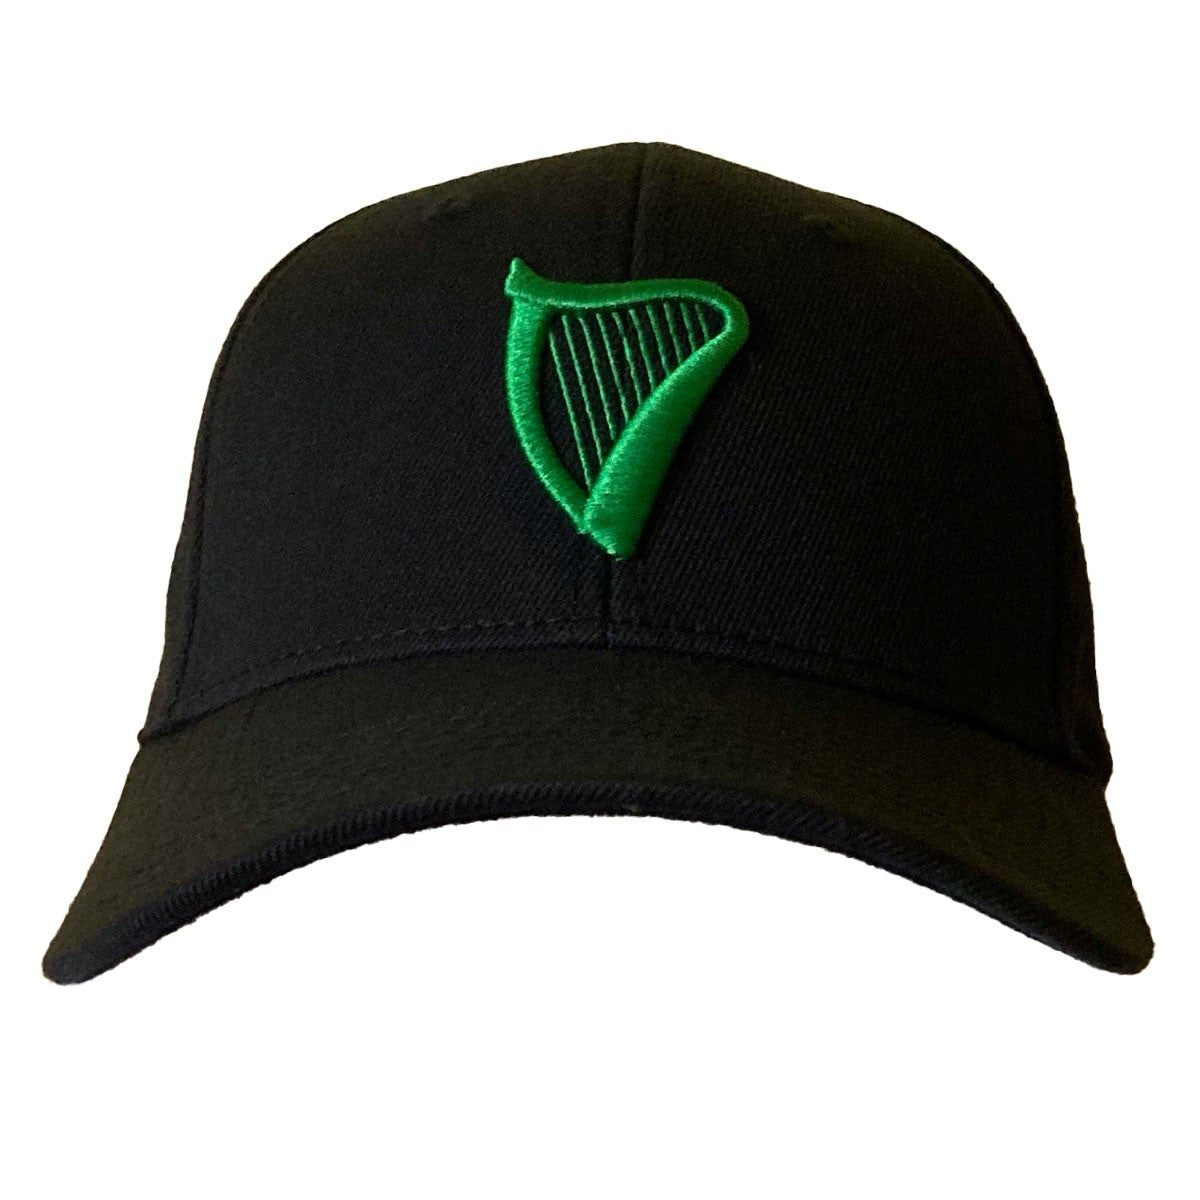 Irish Brigade! Wool Blend Flex Fit Baseball Cap